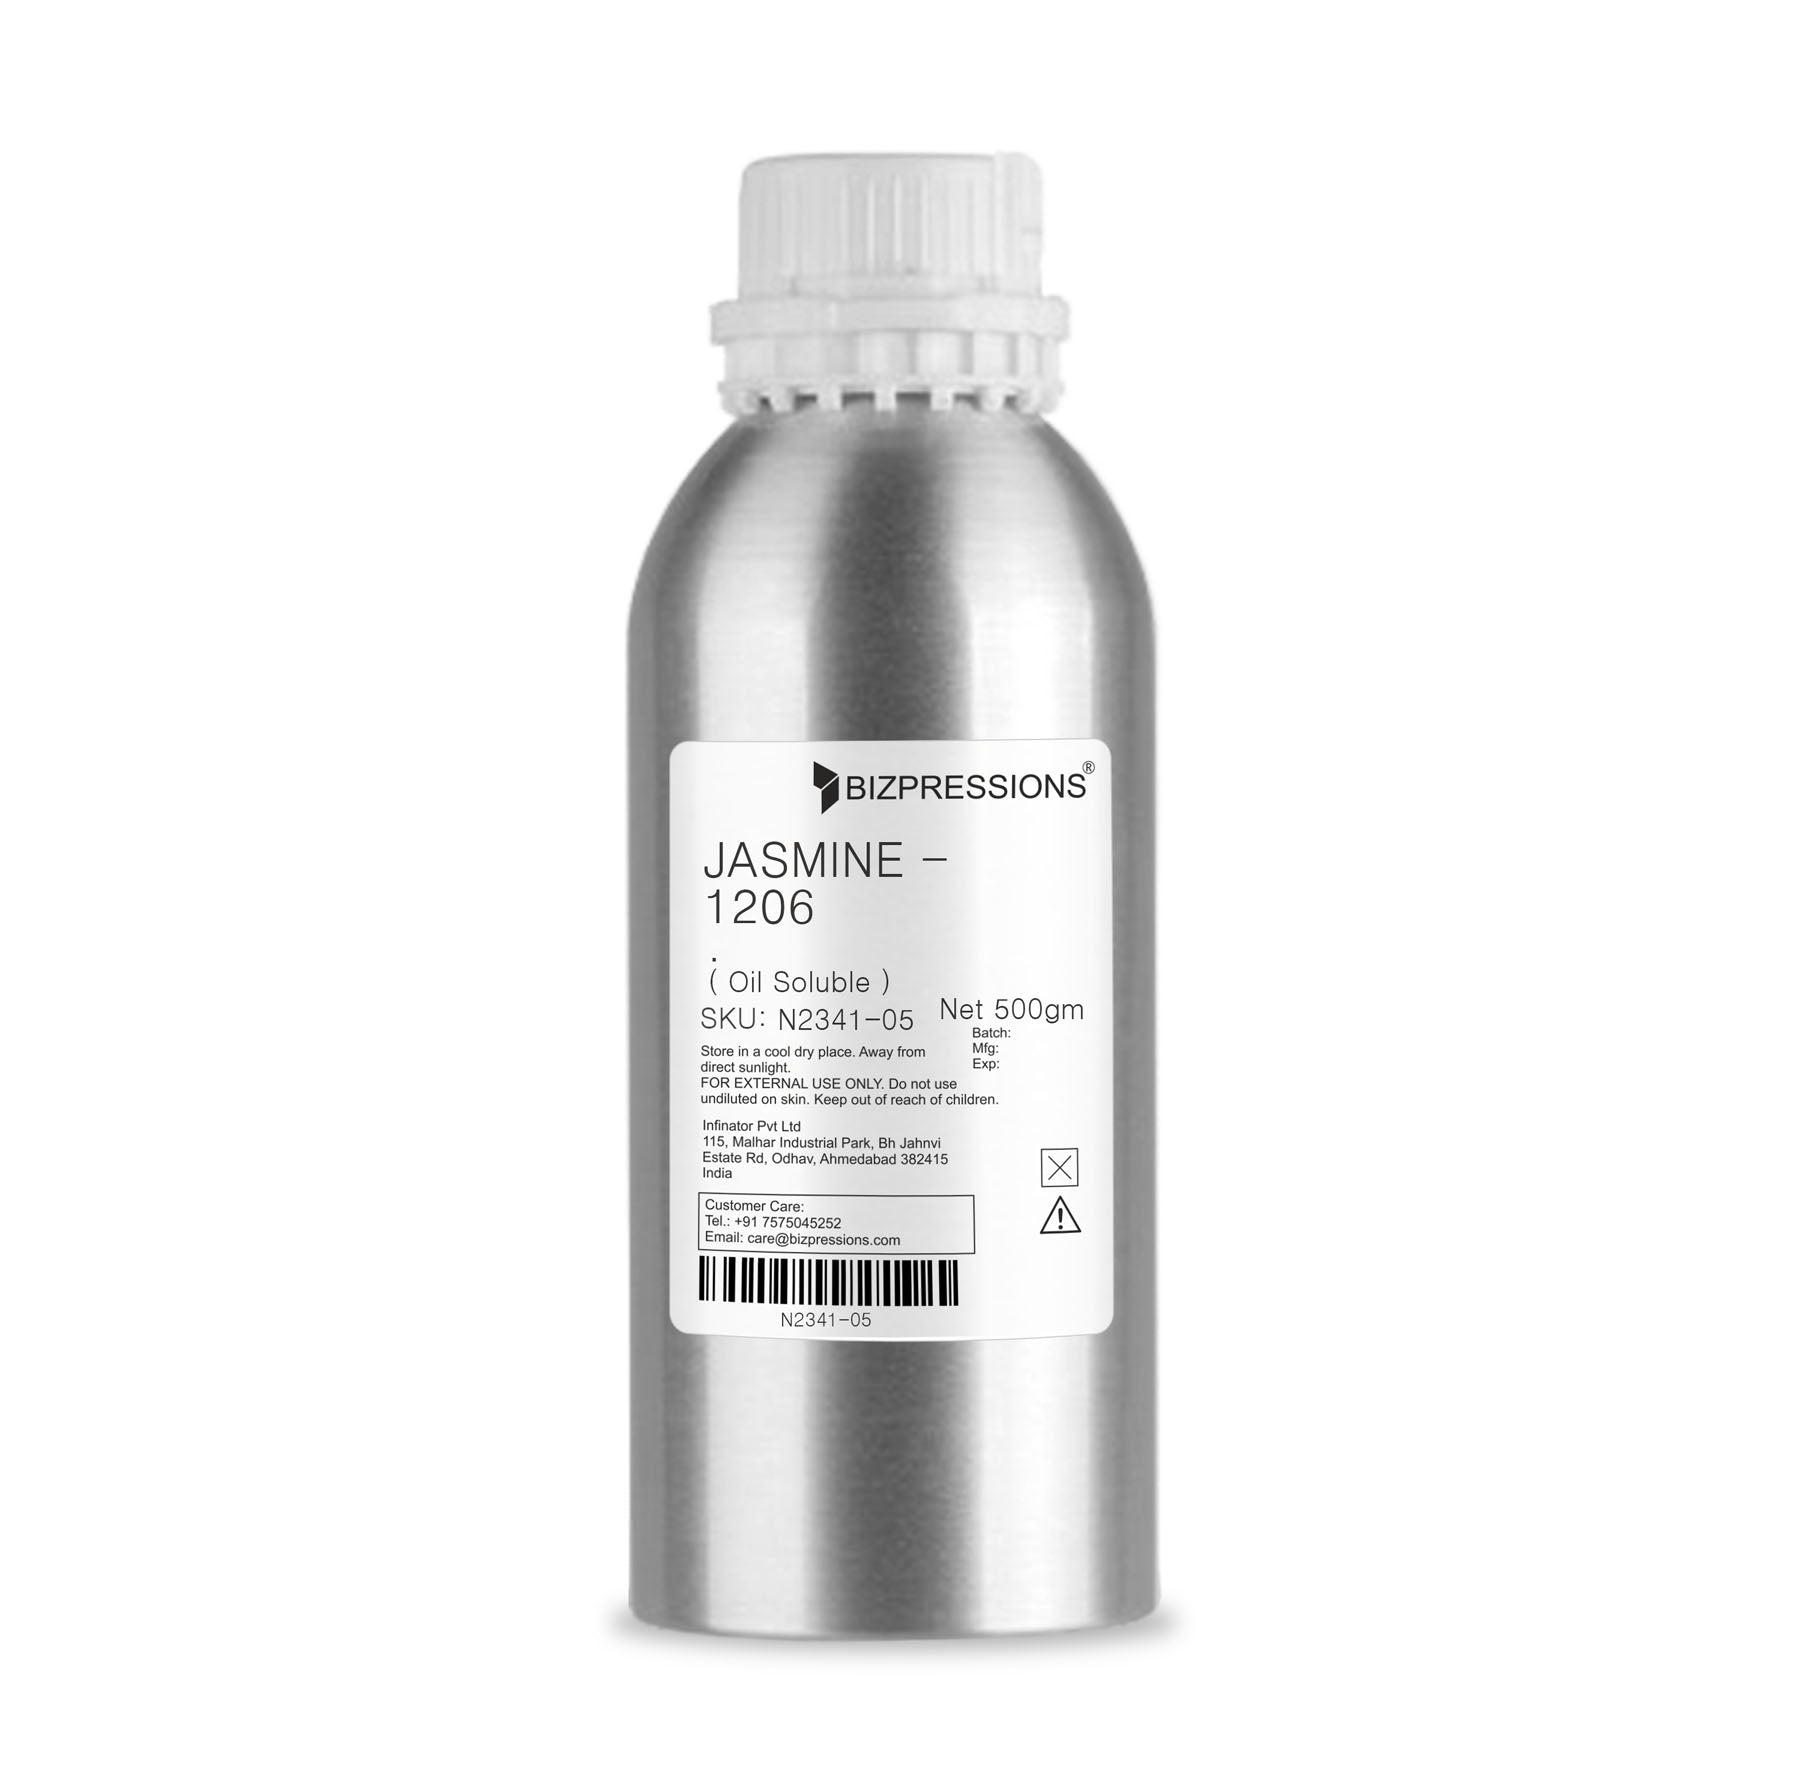 JASMINE - 1206 - Fragrance ( Oil Soluble ) - 500 gm